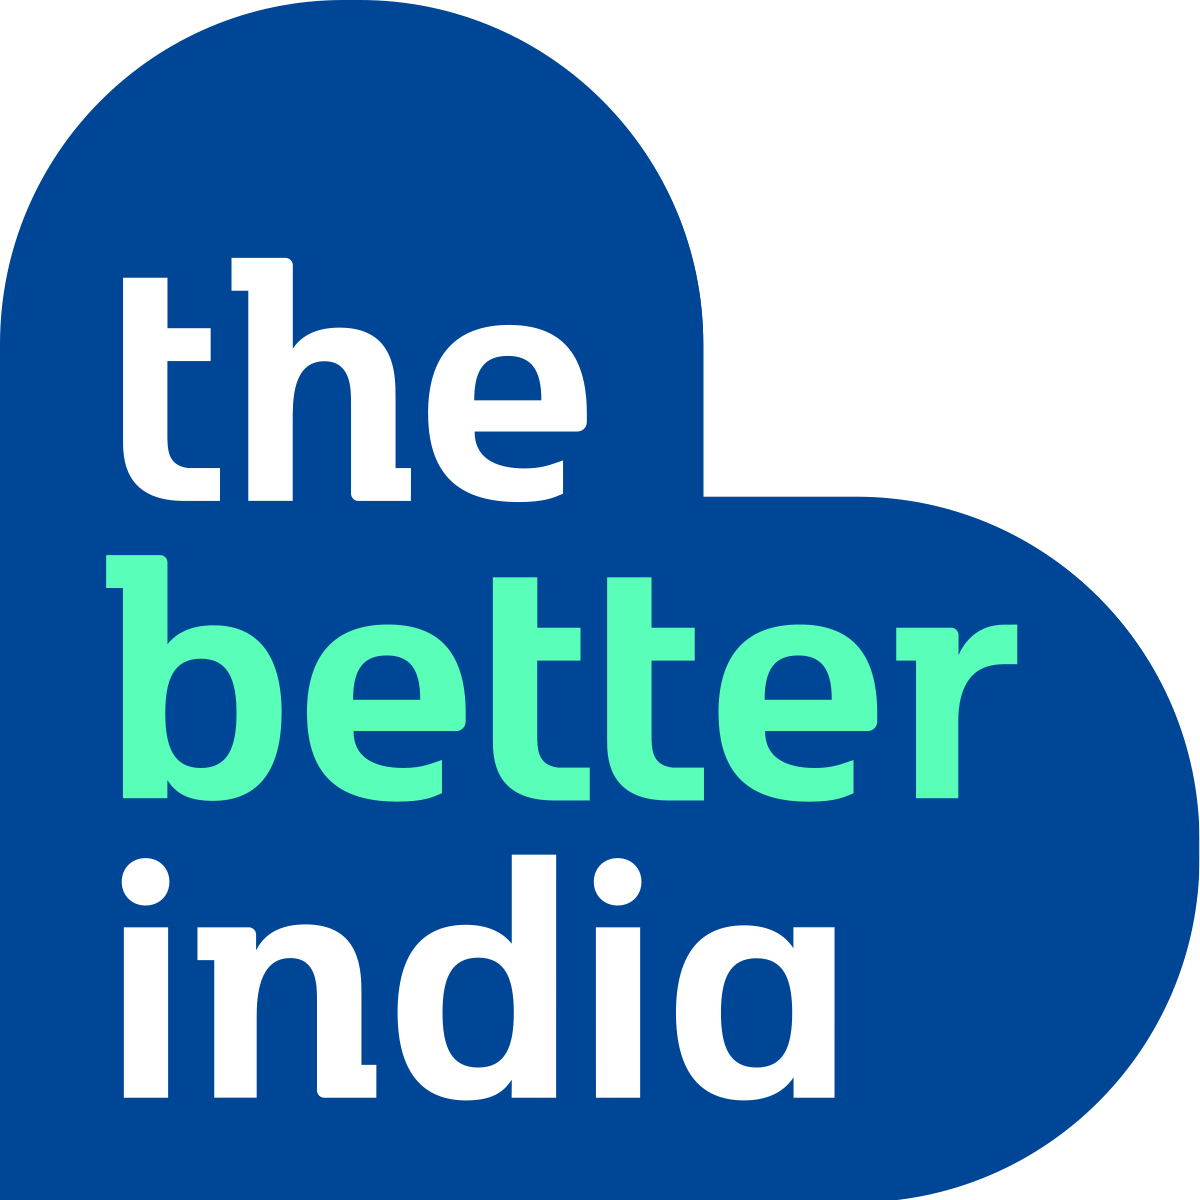 Better India